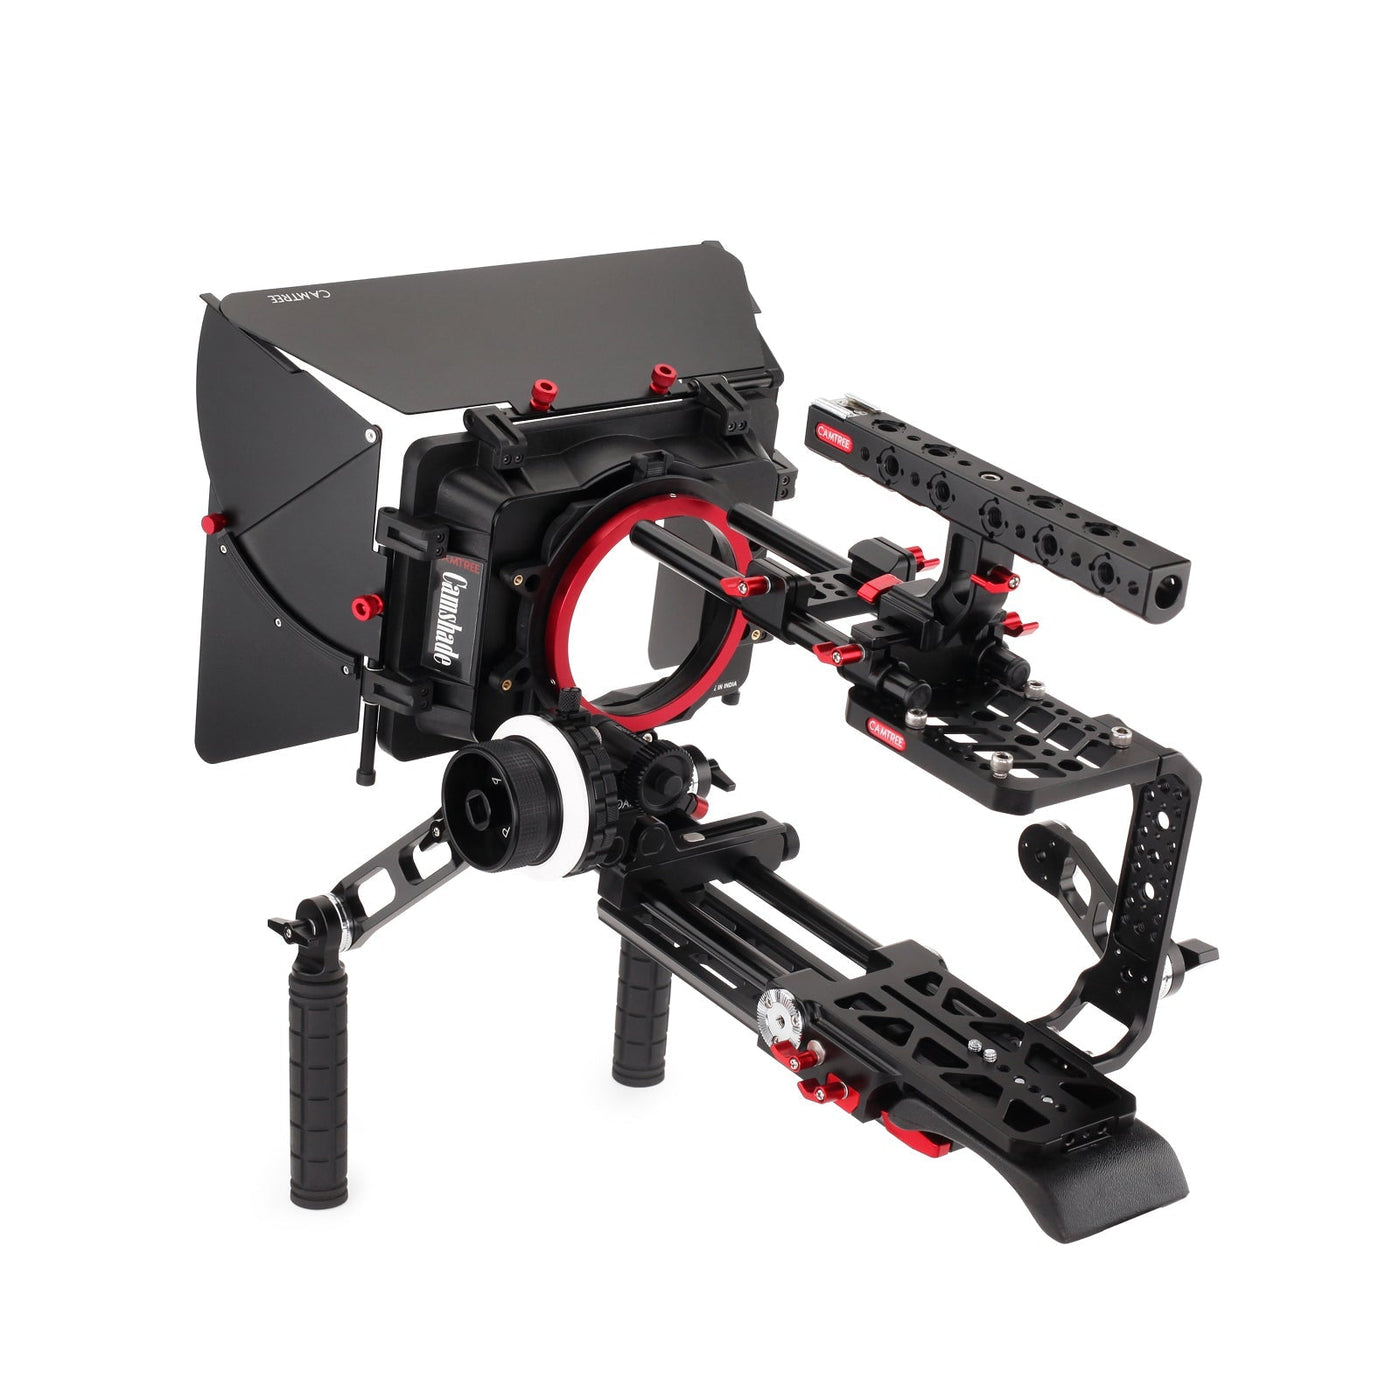 Proaimusa Camtree Hunt Camera Cage Shoulder Kit for Blackmagic URSA Mini 4K/4.6K/Pro 4.6K CH-BMUM-SK